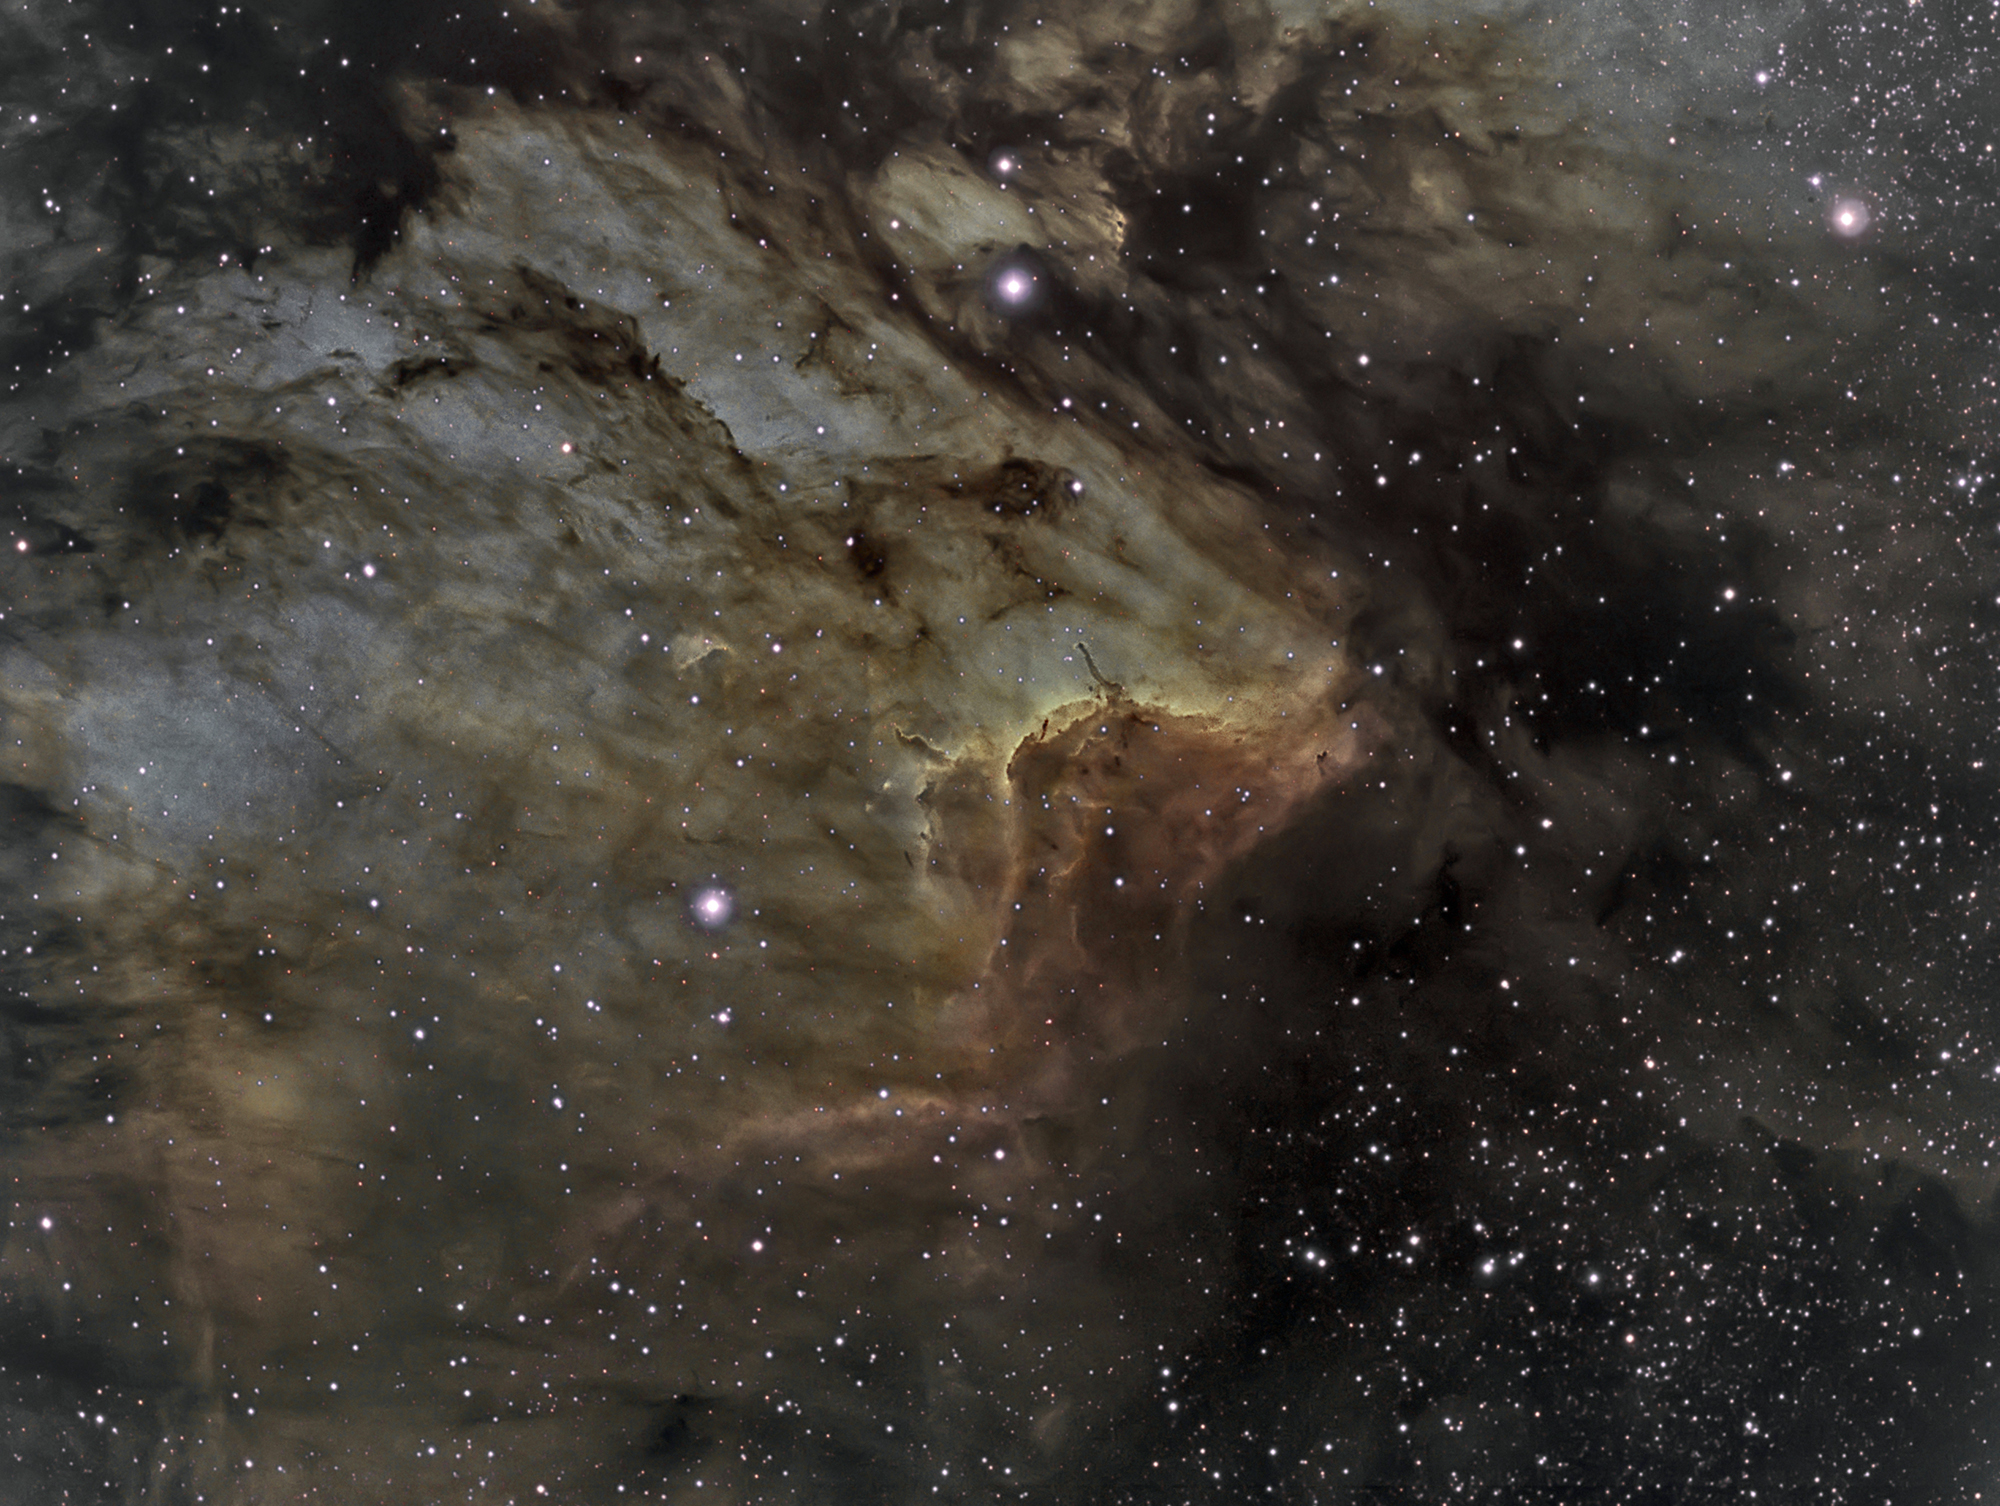 NASA pic of the Pelican Nebula